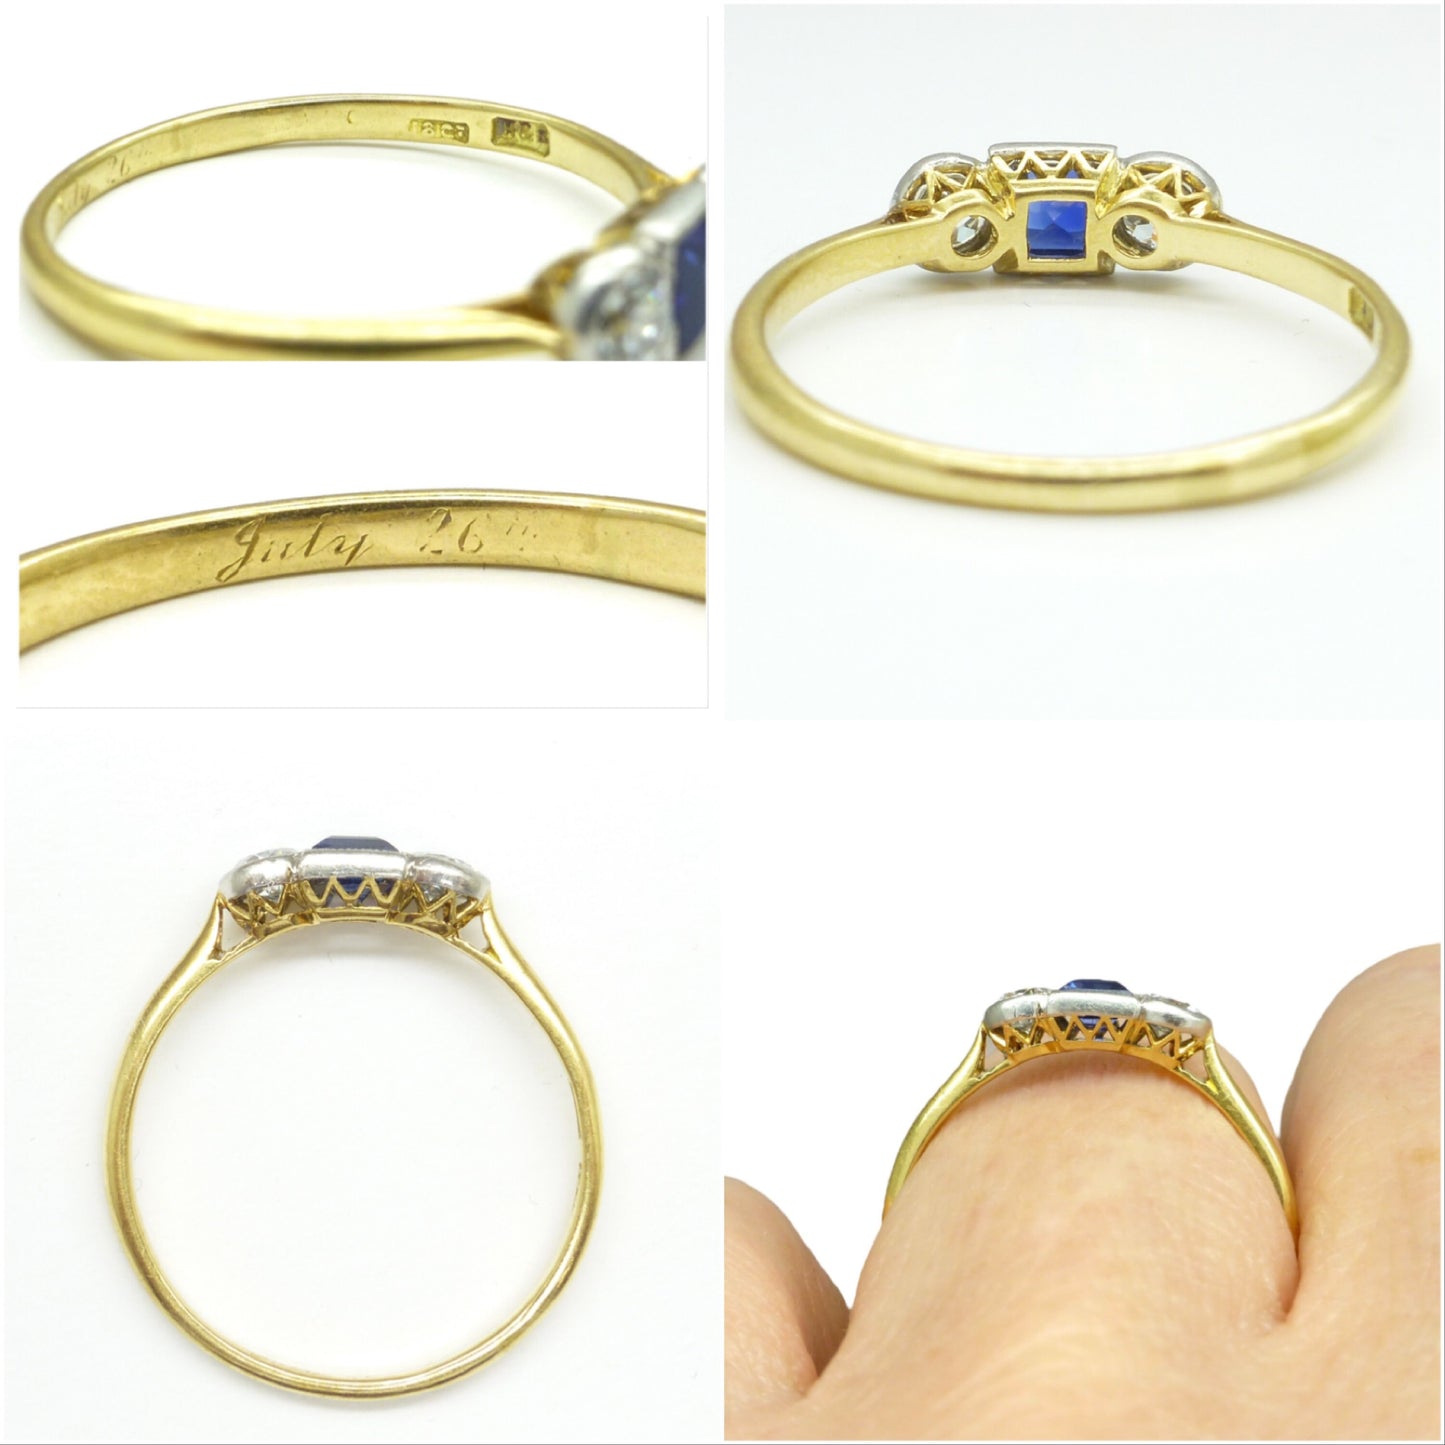 Art Deco 18ct Platinum sapphire diamond bezel set trilogy ring c1920's - 1930's ~